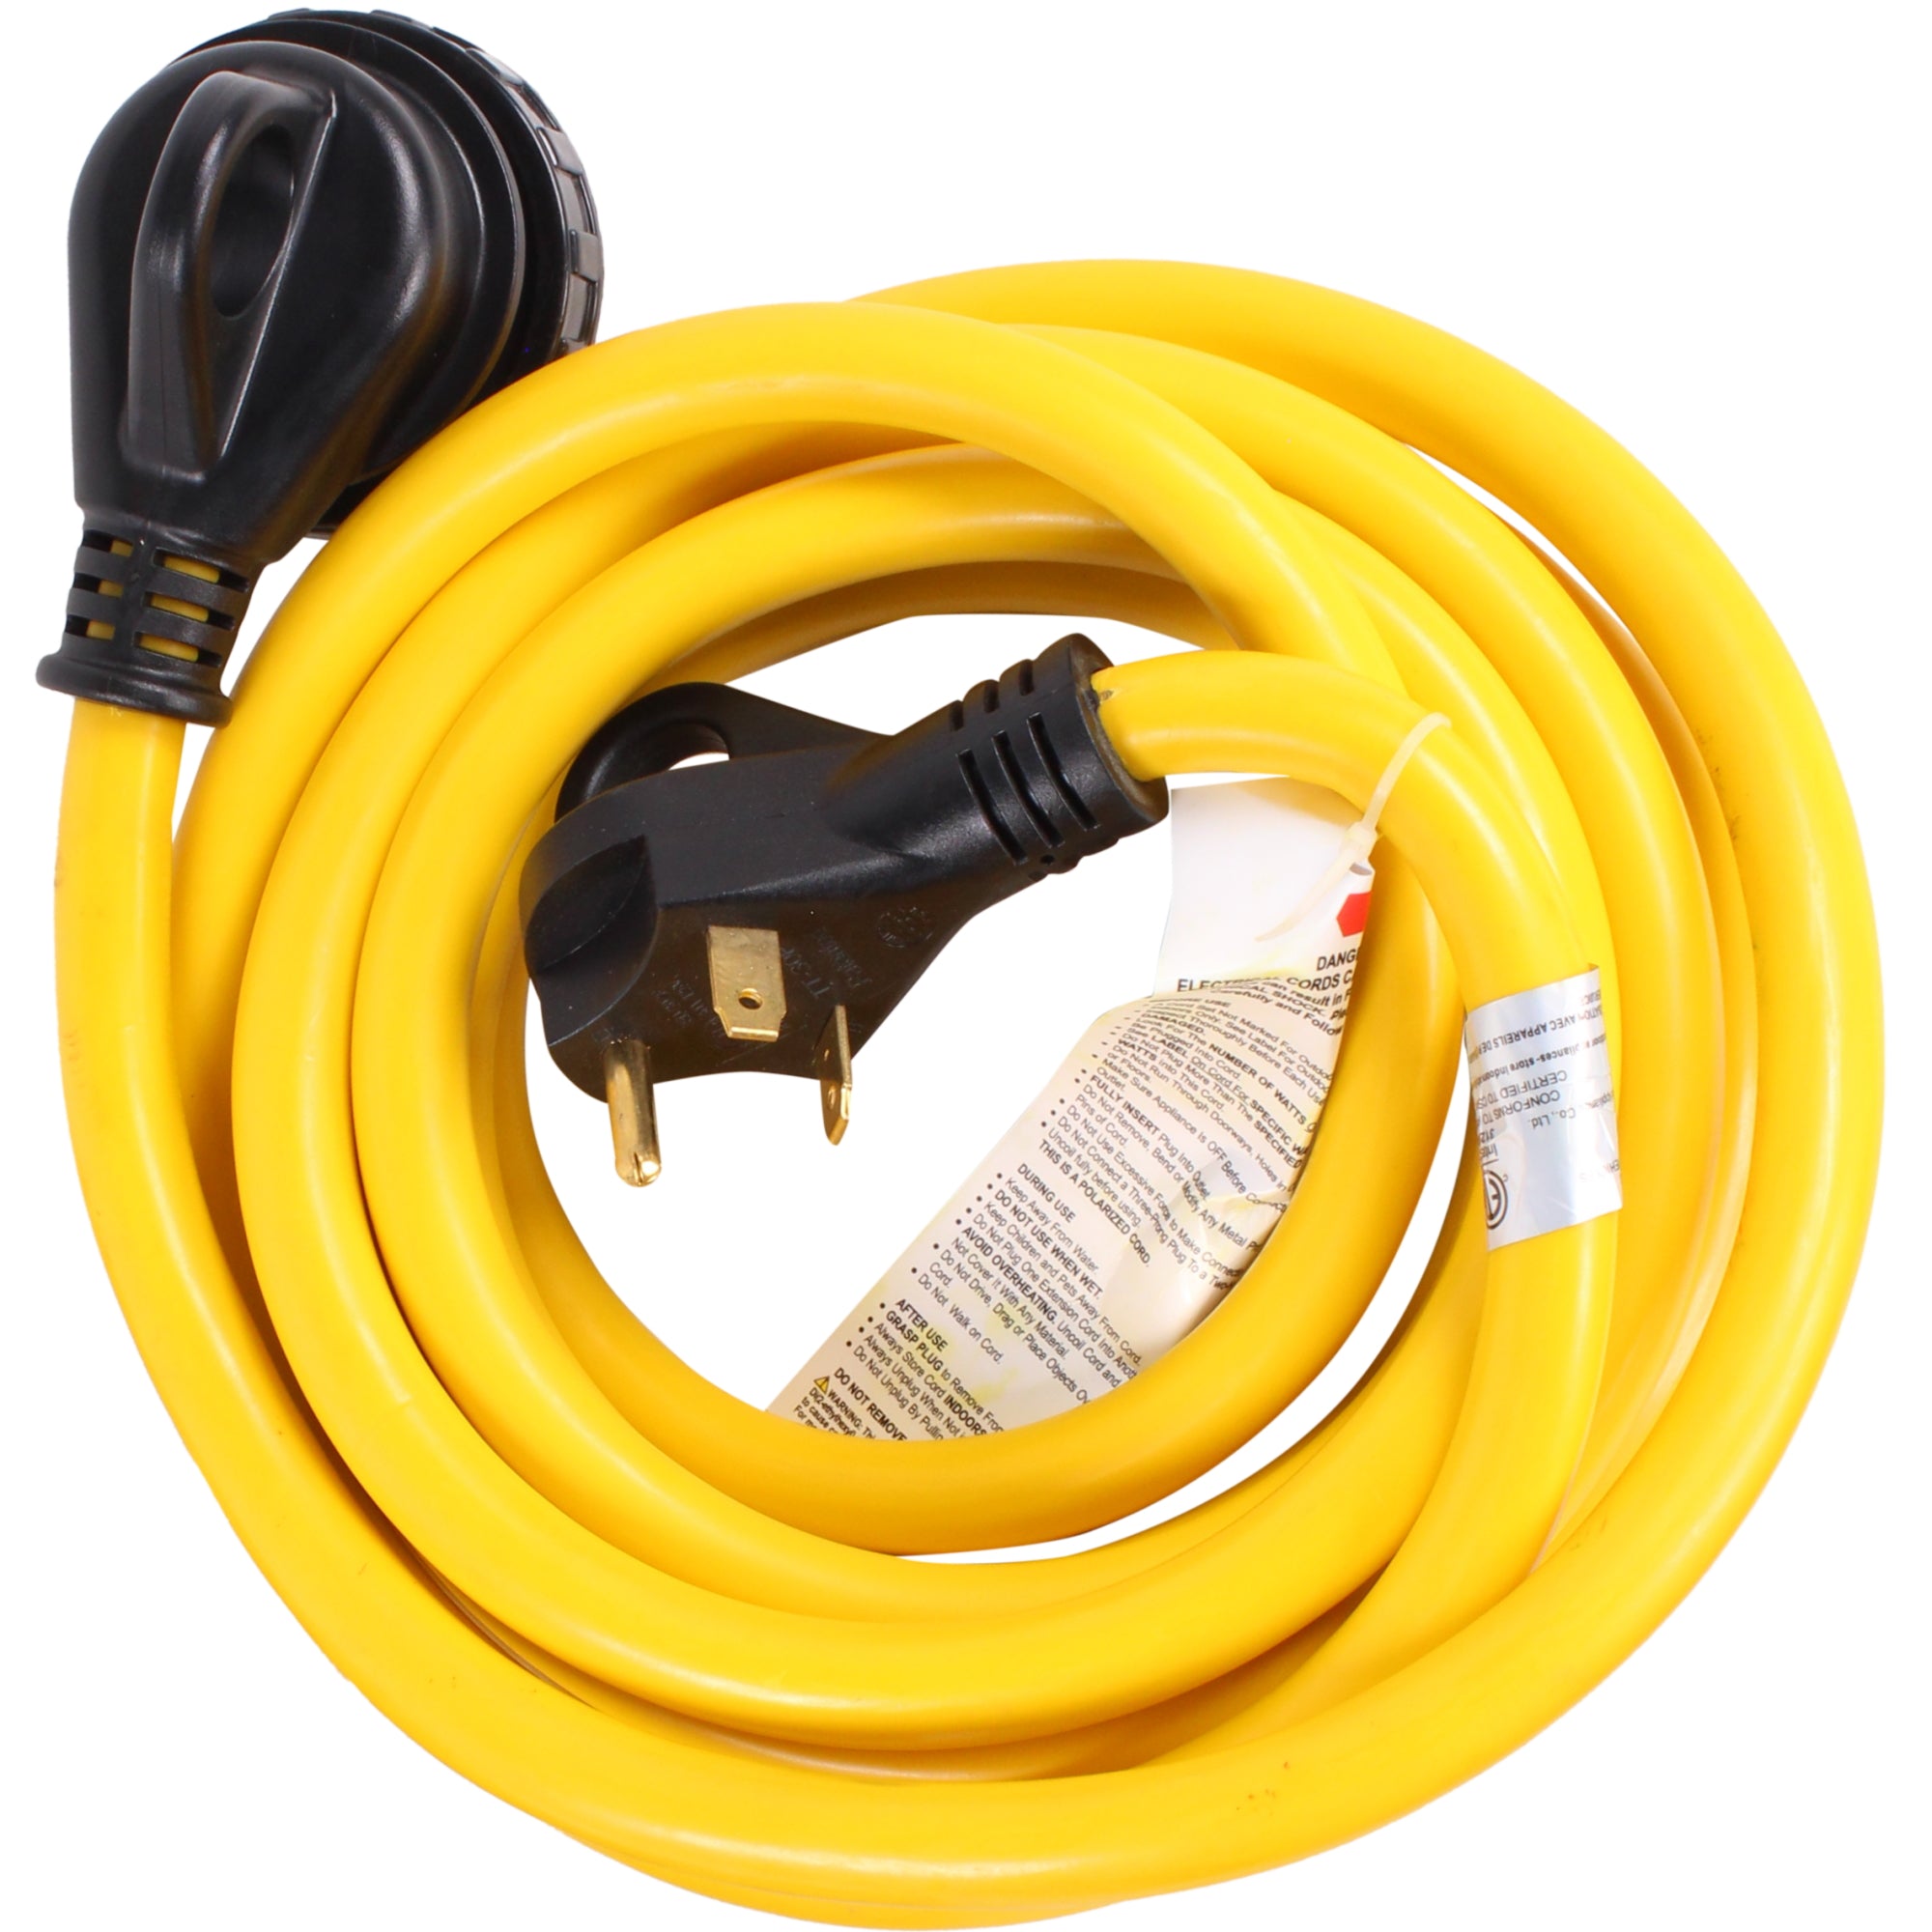 Journeyman-pro 30A RV Power Extension Cord TT30 (Safety Yellow), Black Grip Handle w/Power Indicator - 15, 25, 50 Feet Length 125V - 30 Amp Charging